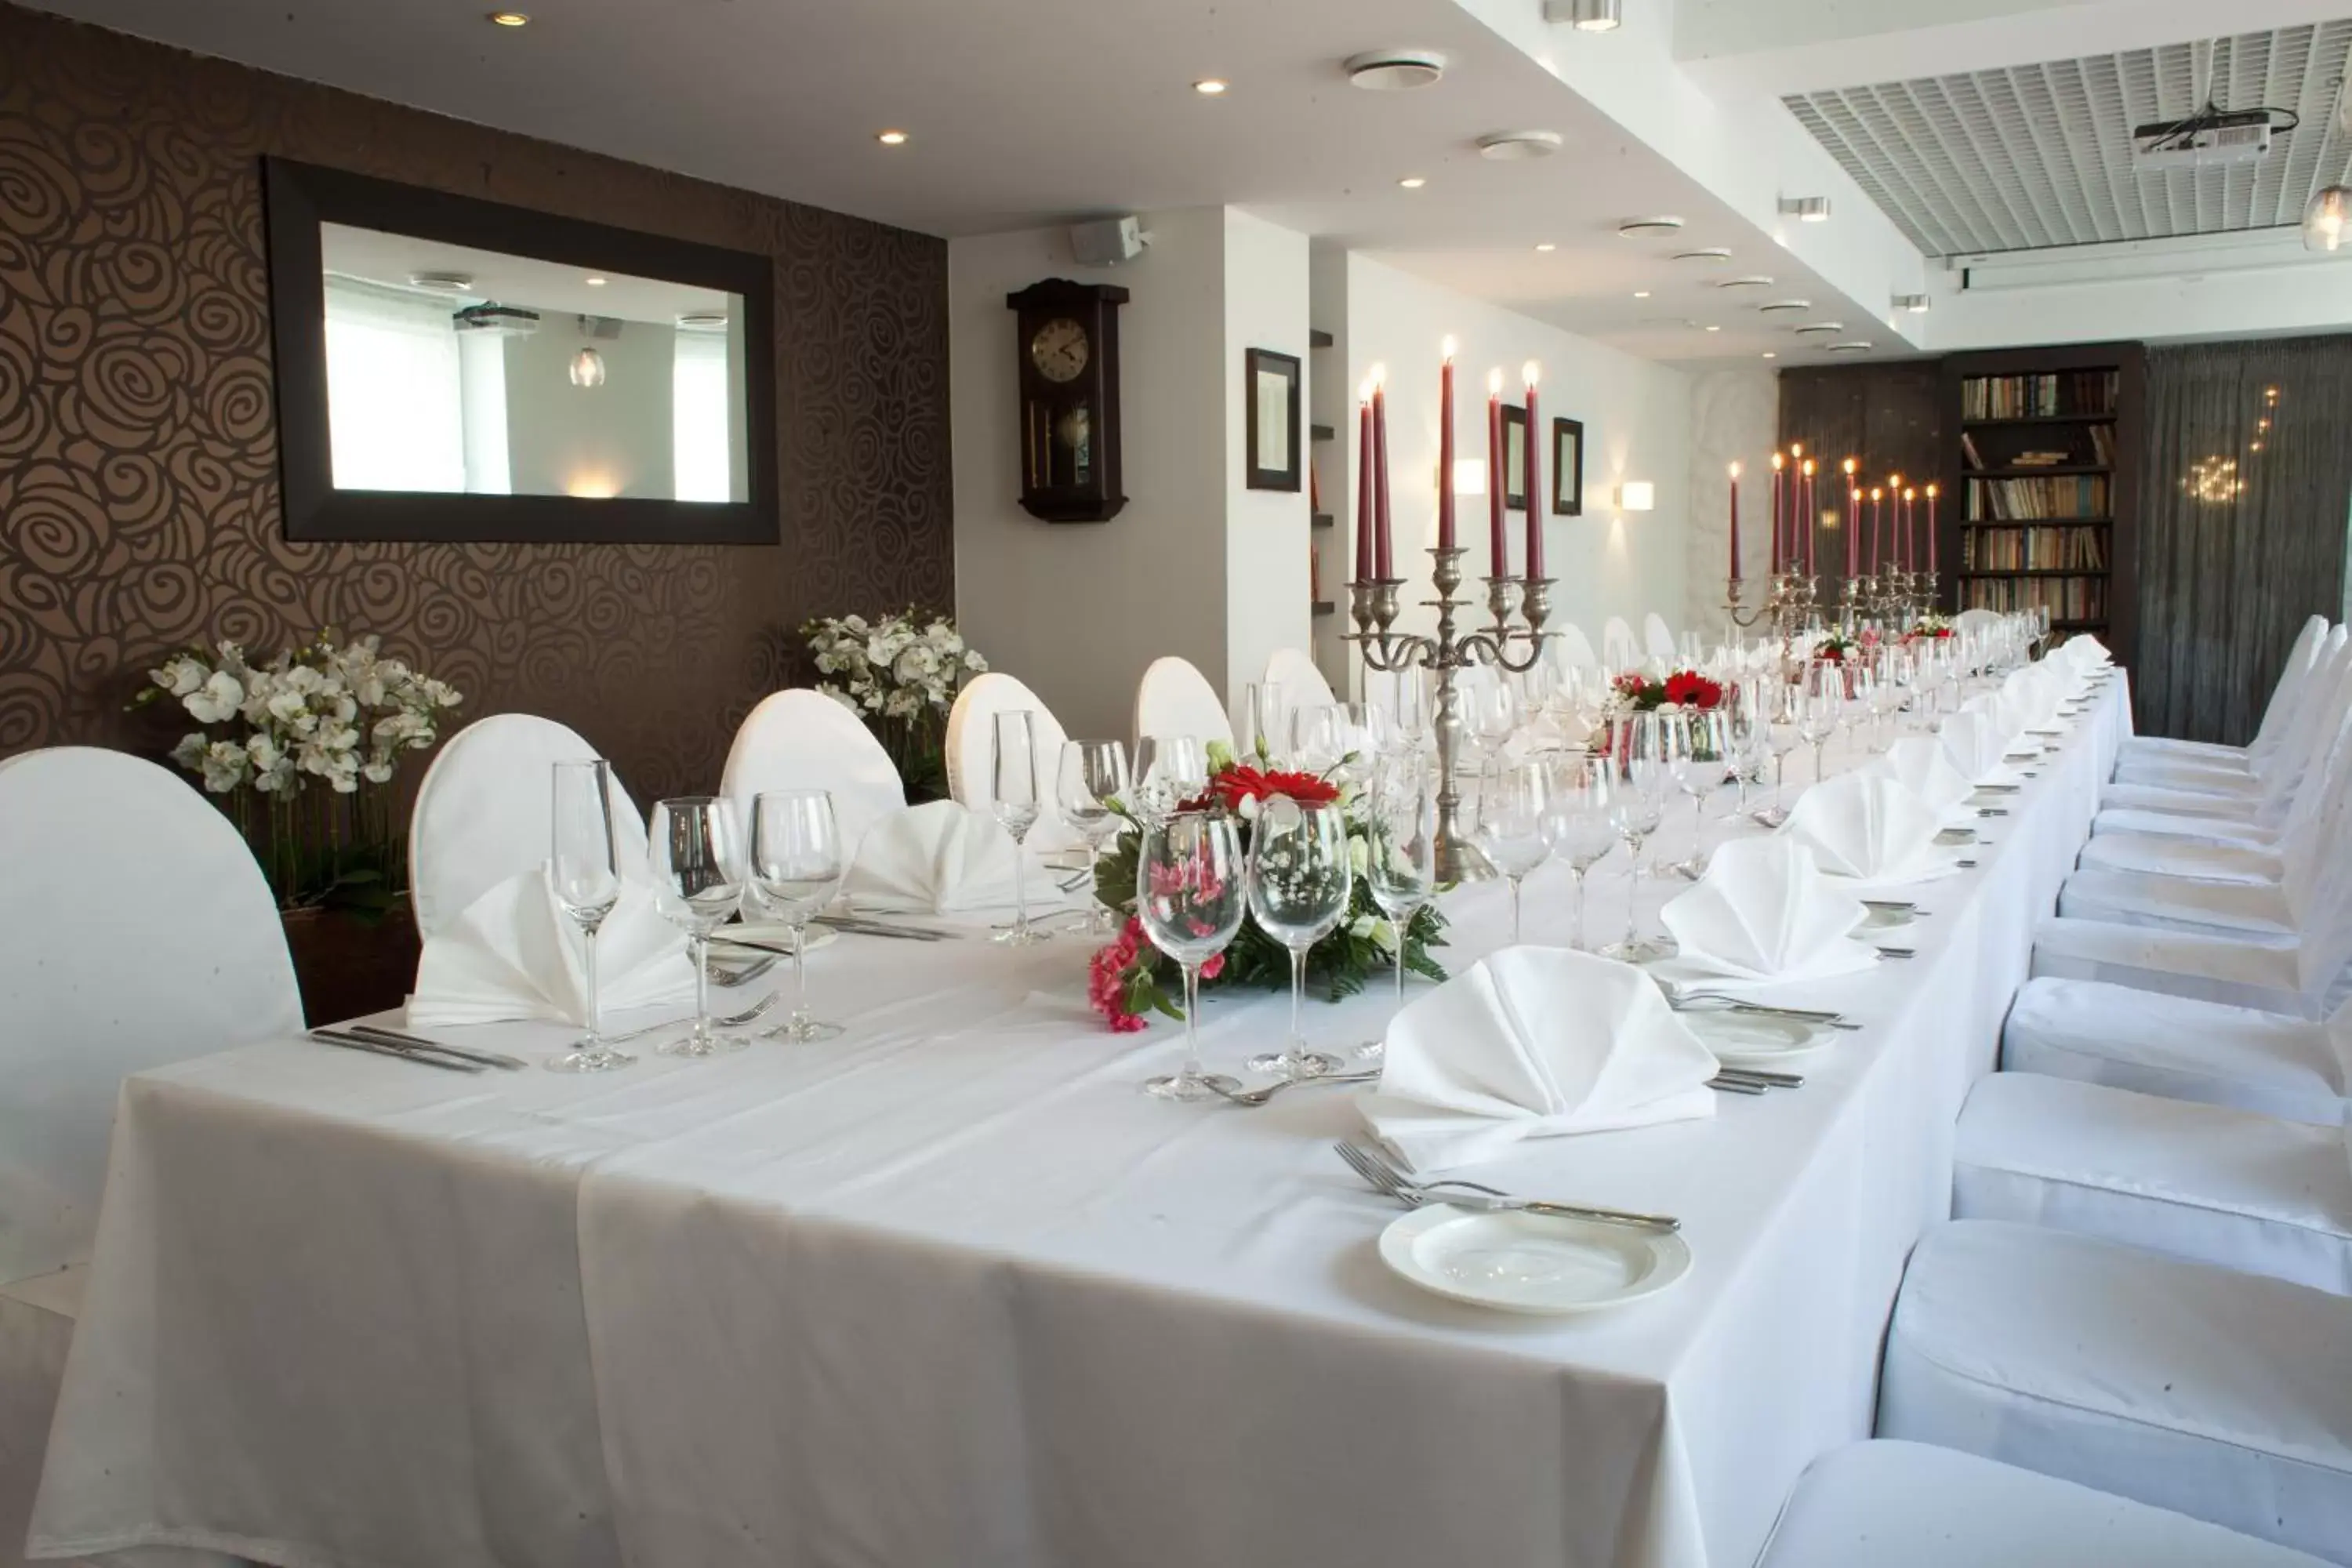 Restaurant/places to eat, Banquet Facilities in Kreutzwald Hotel Tallinn